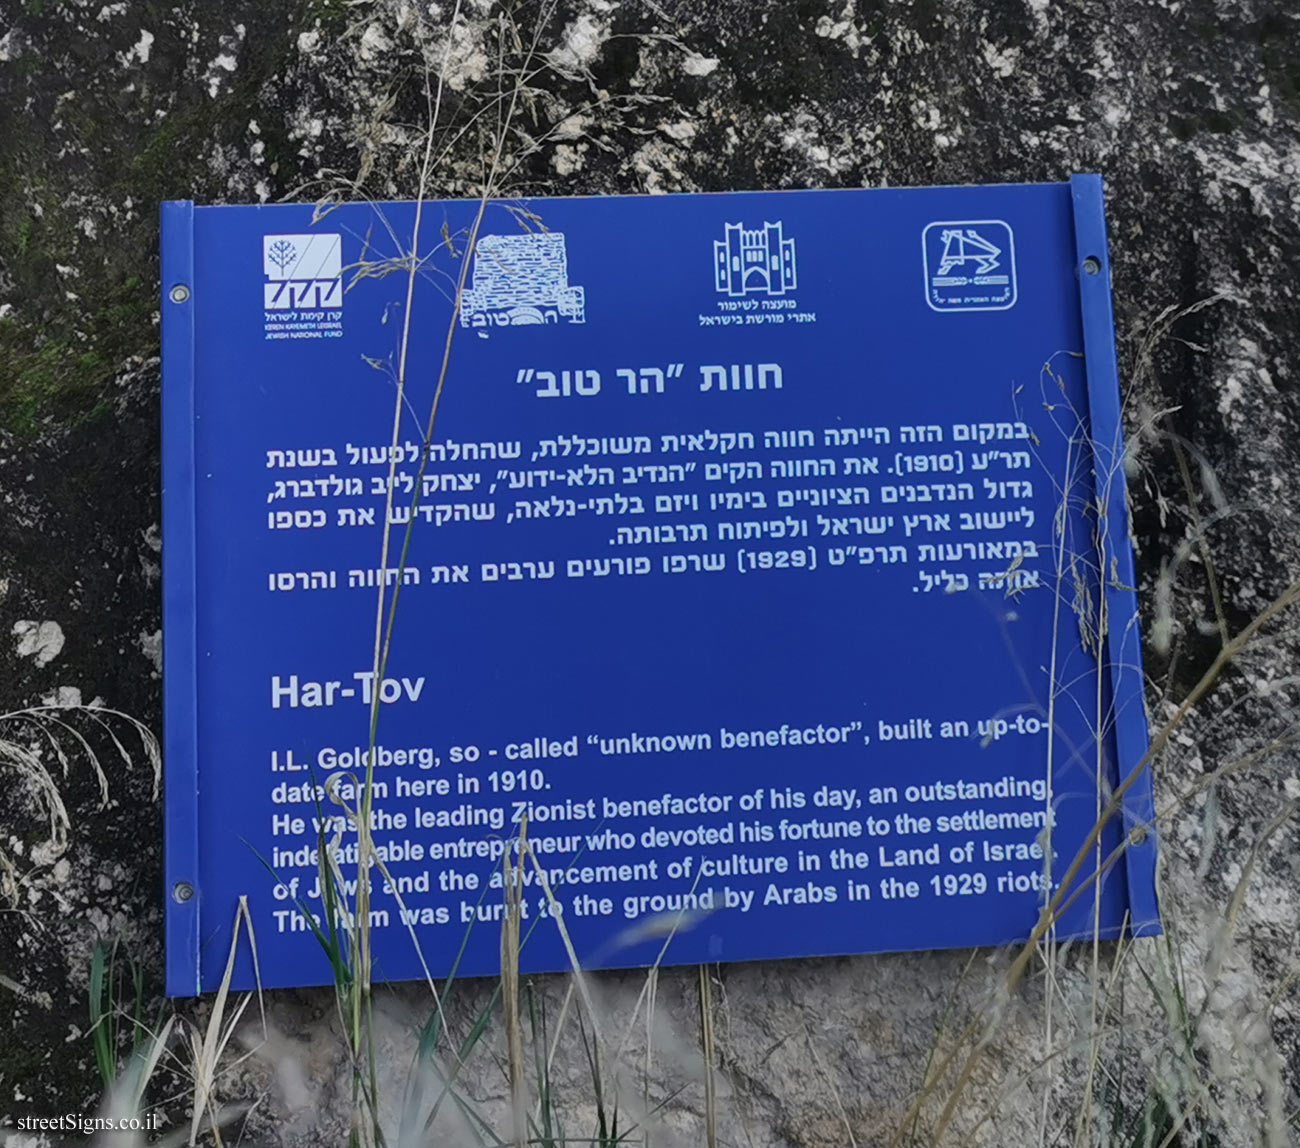 Hartuv - Heritage Sites in Israel - Hartuv Farm